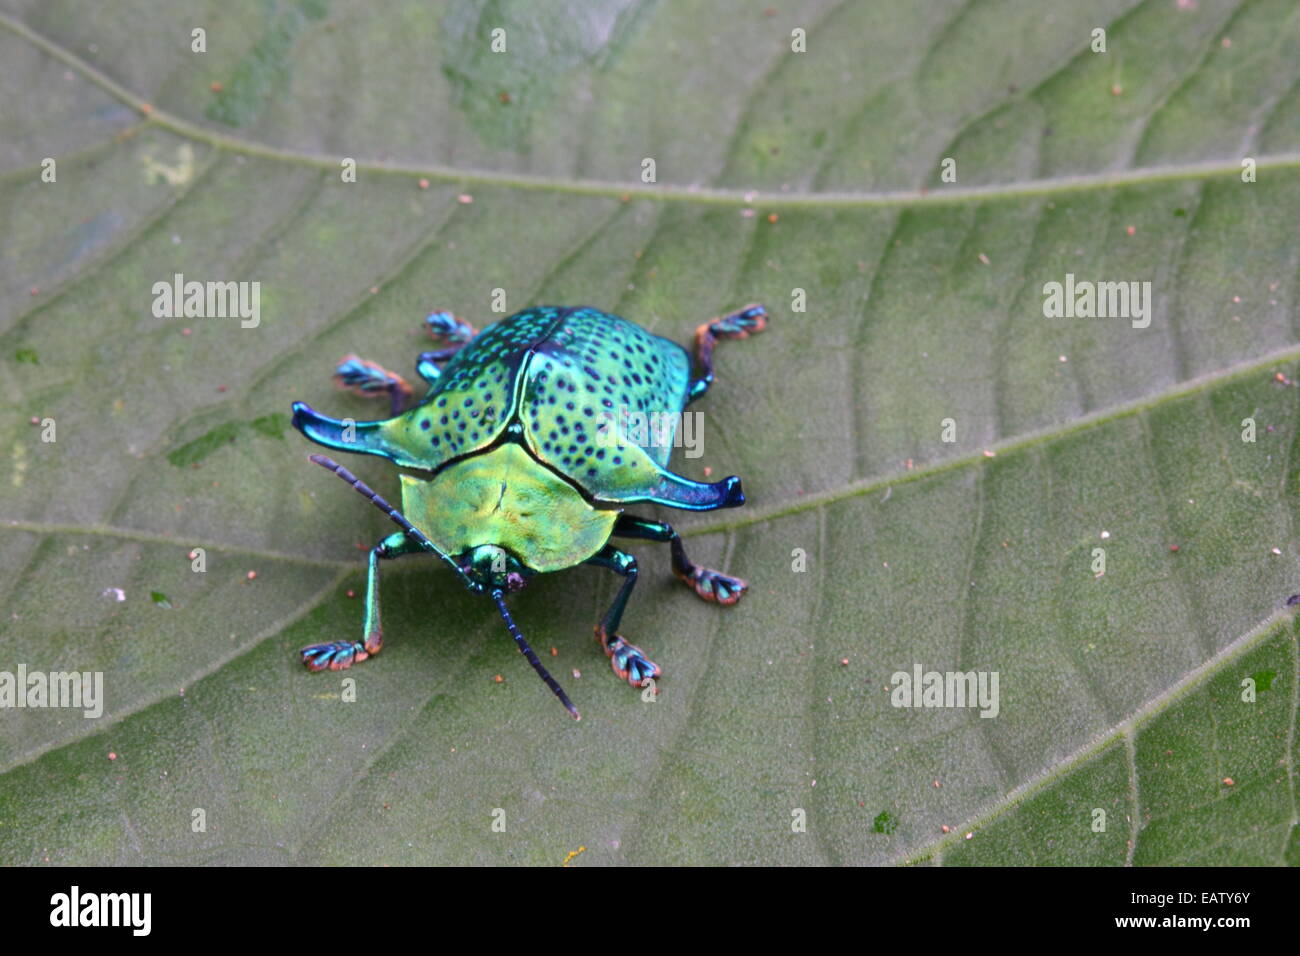 A green leaf beetle, Omocerus casta coeruleopunta, crawling on a leaf. Stock Photo